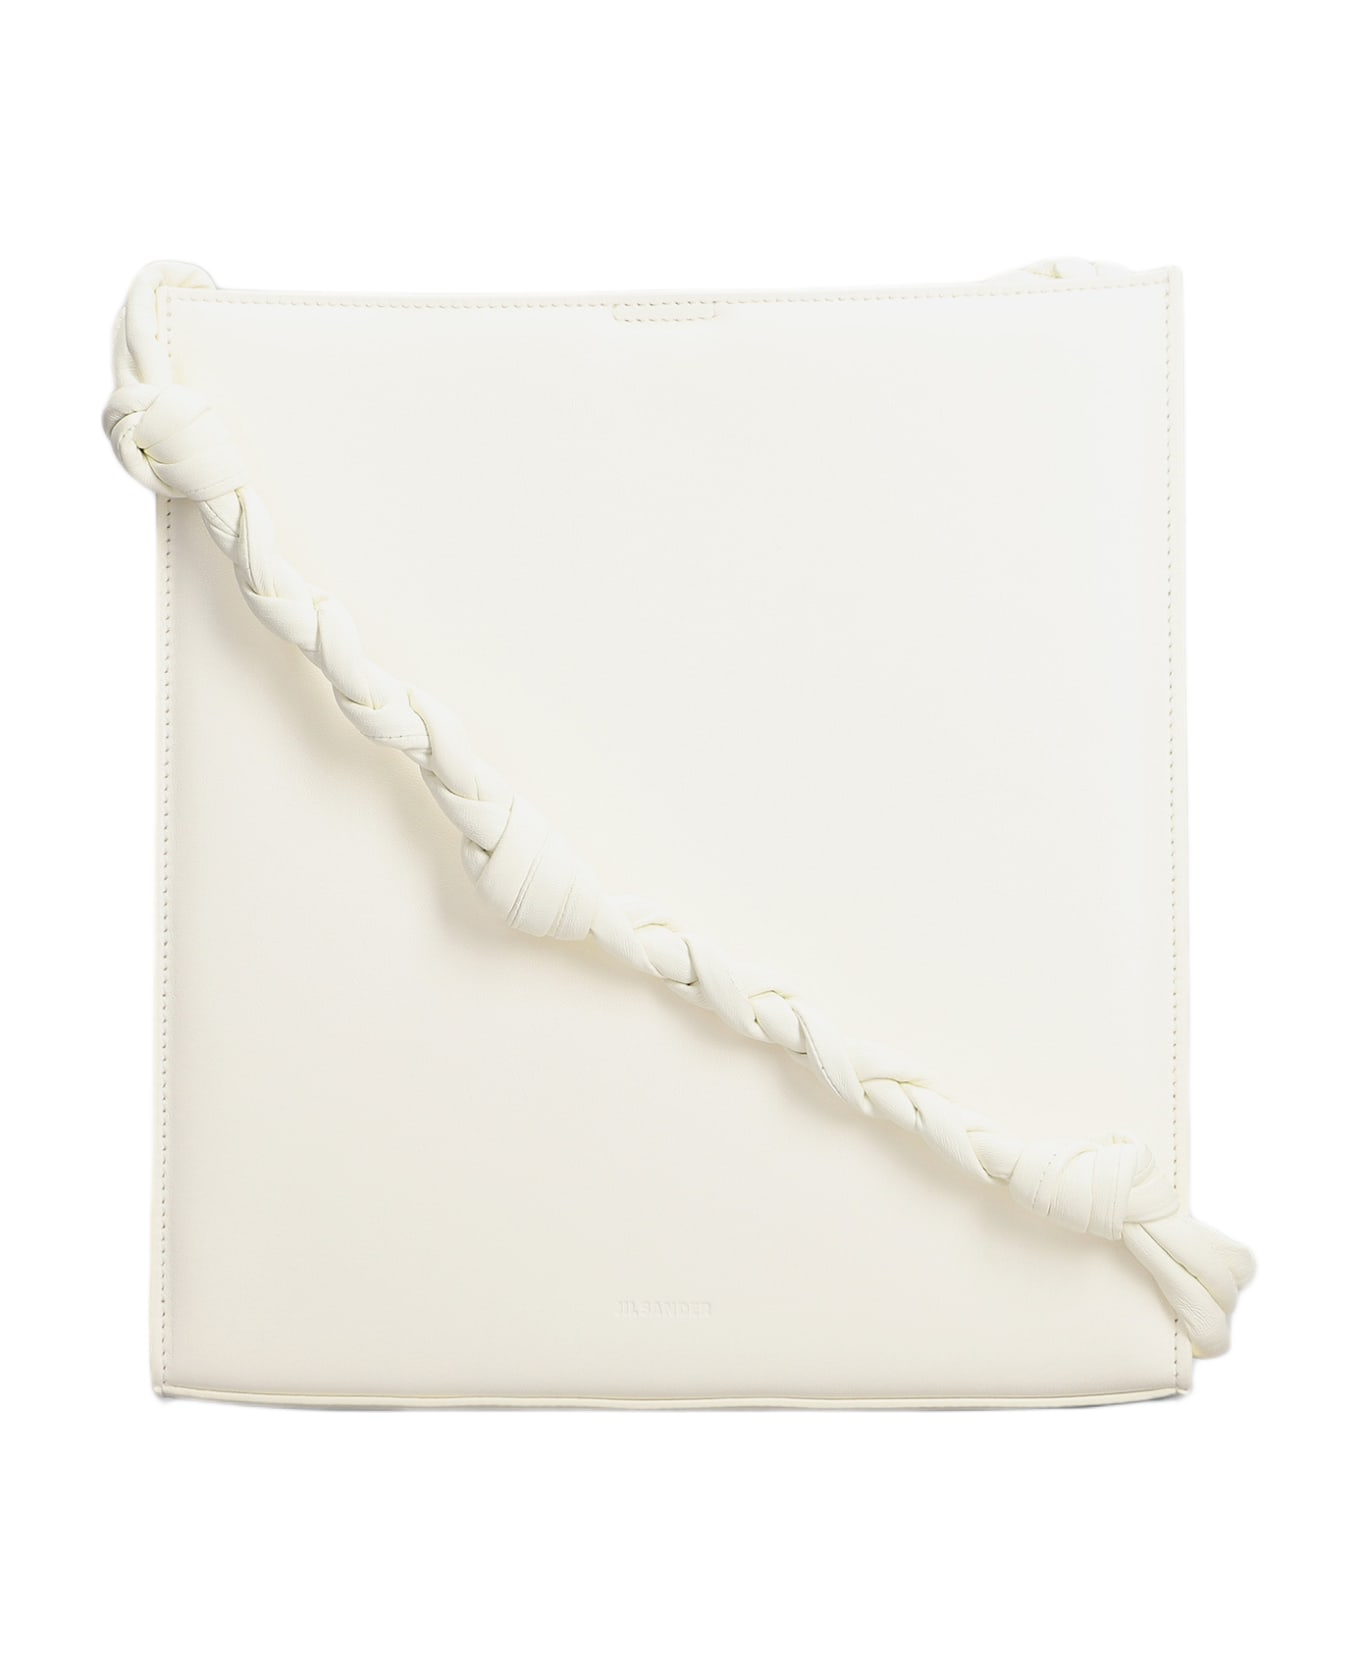 Jil Sander Shoulder Bag In White Leather - white ショルダーバッグ